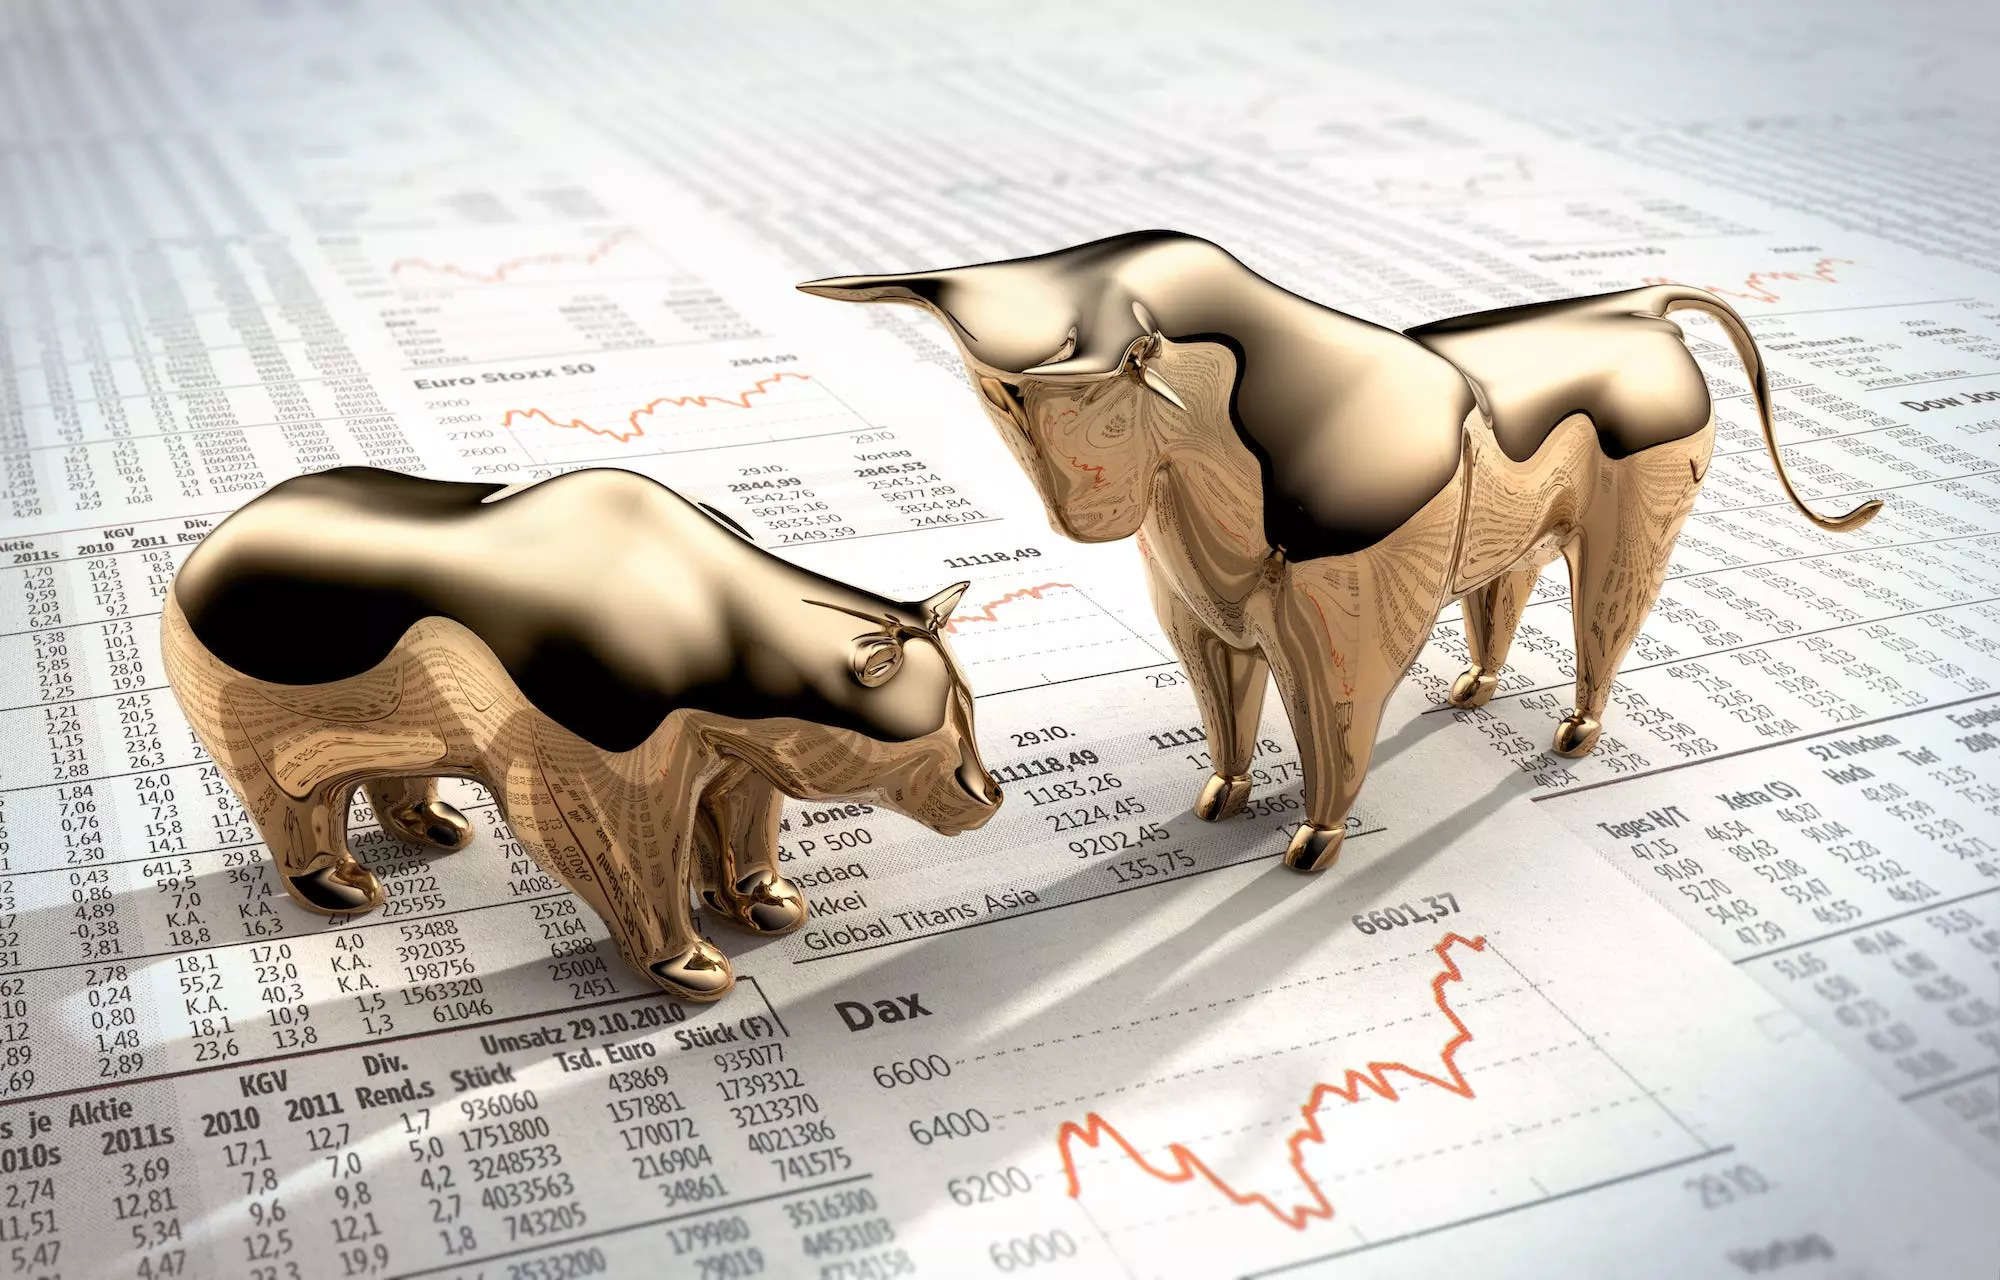 Wall Street is debating whether the bear market still has legs